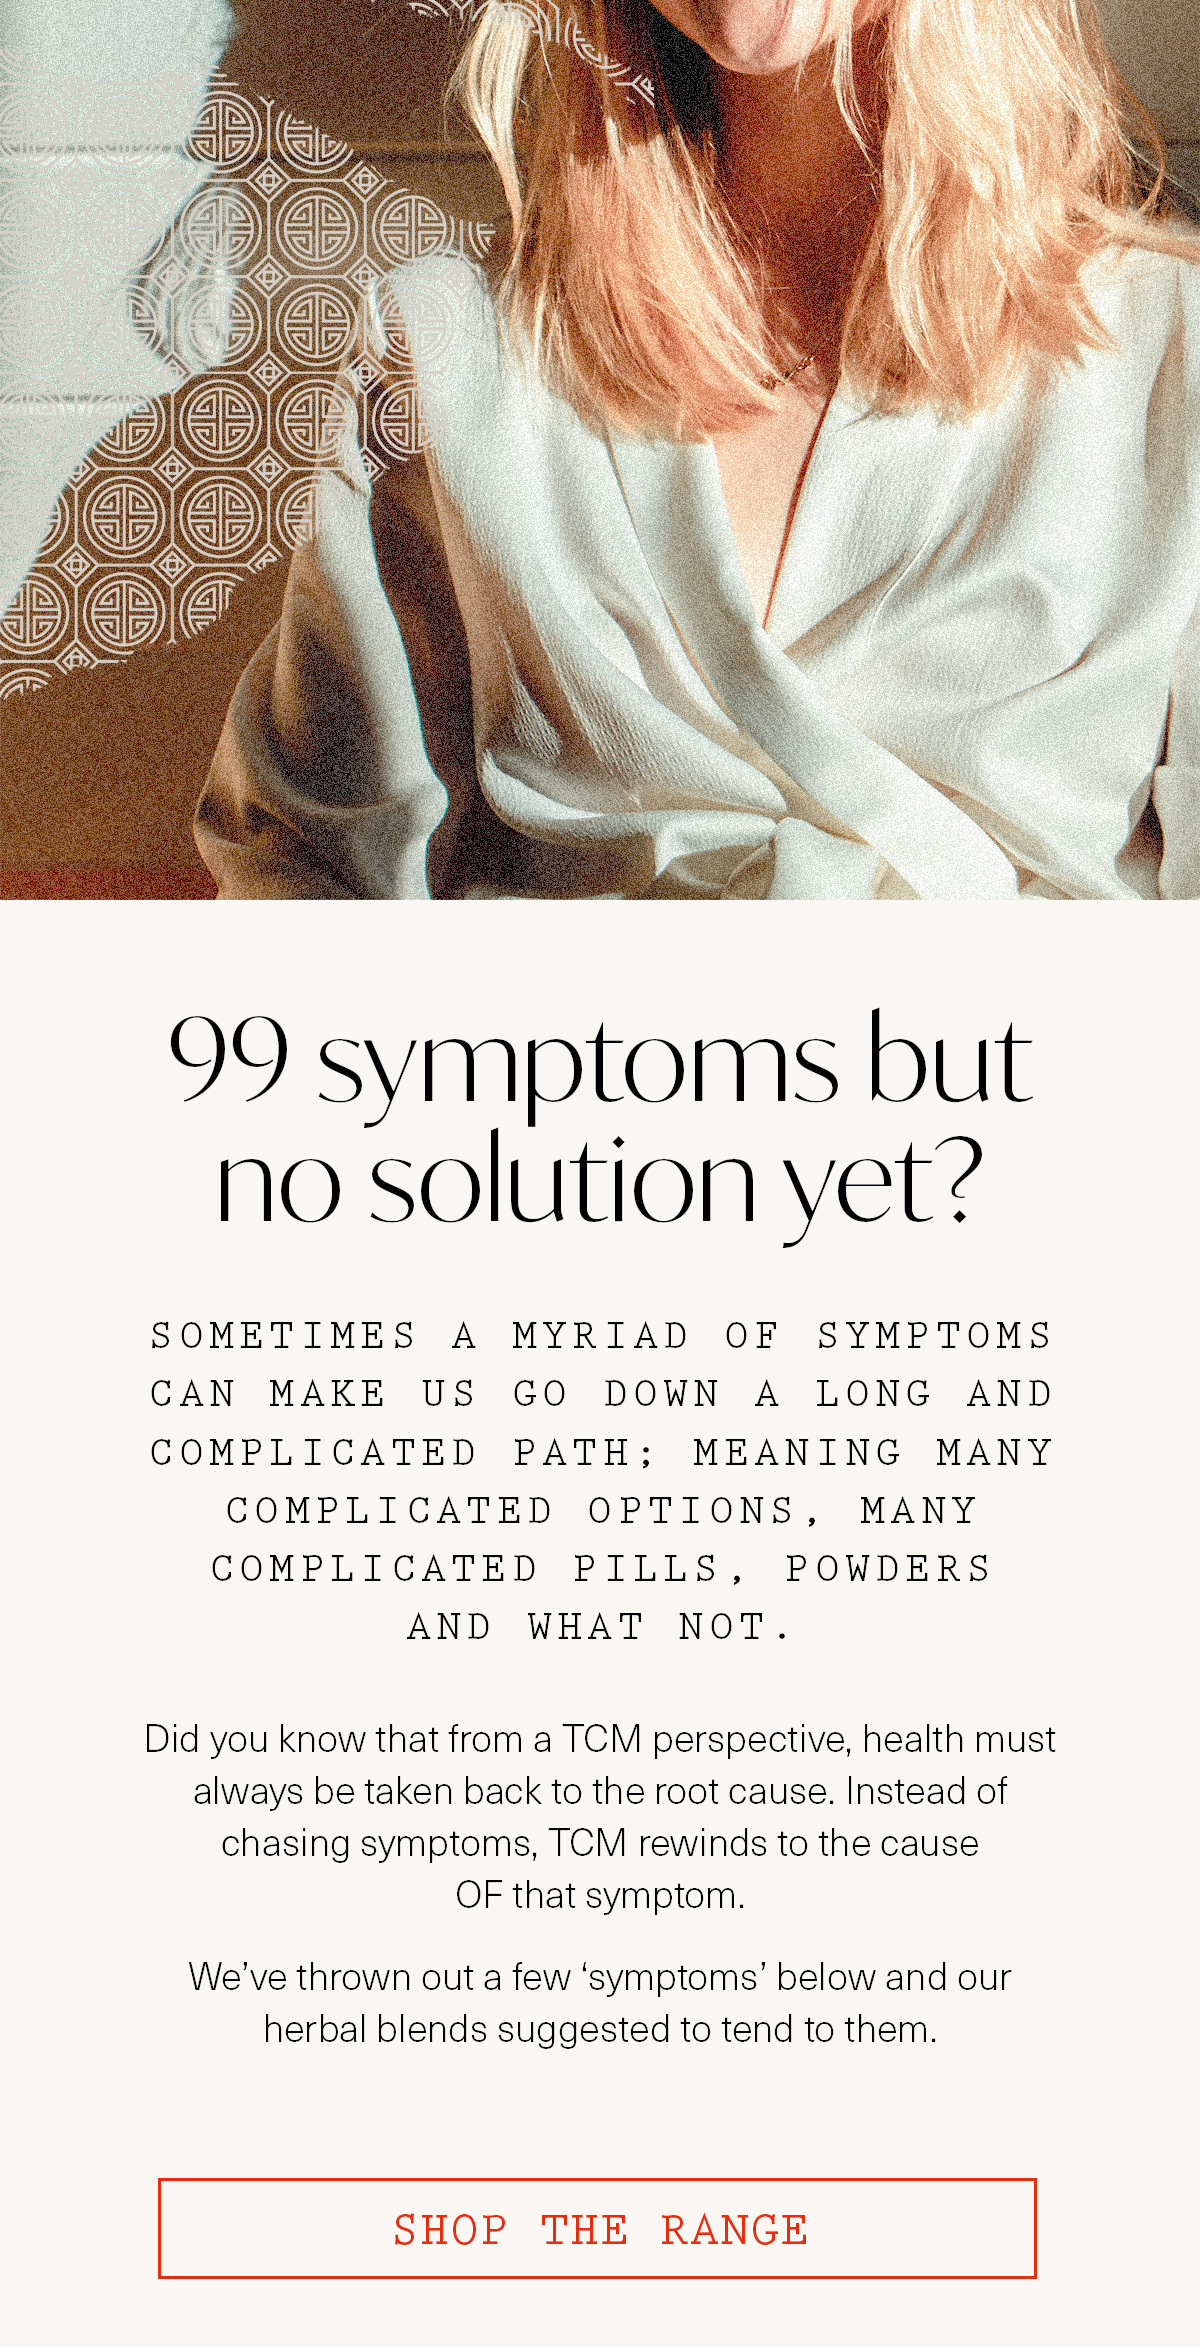 99 symptoms but no solution yet?